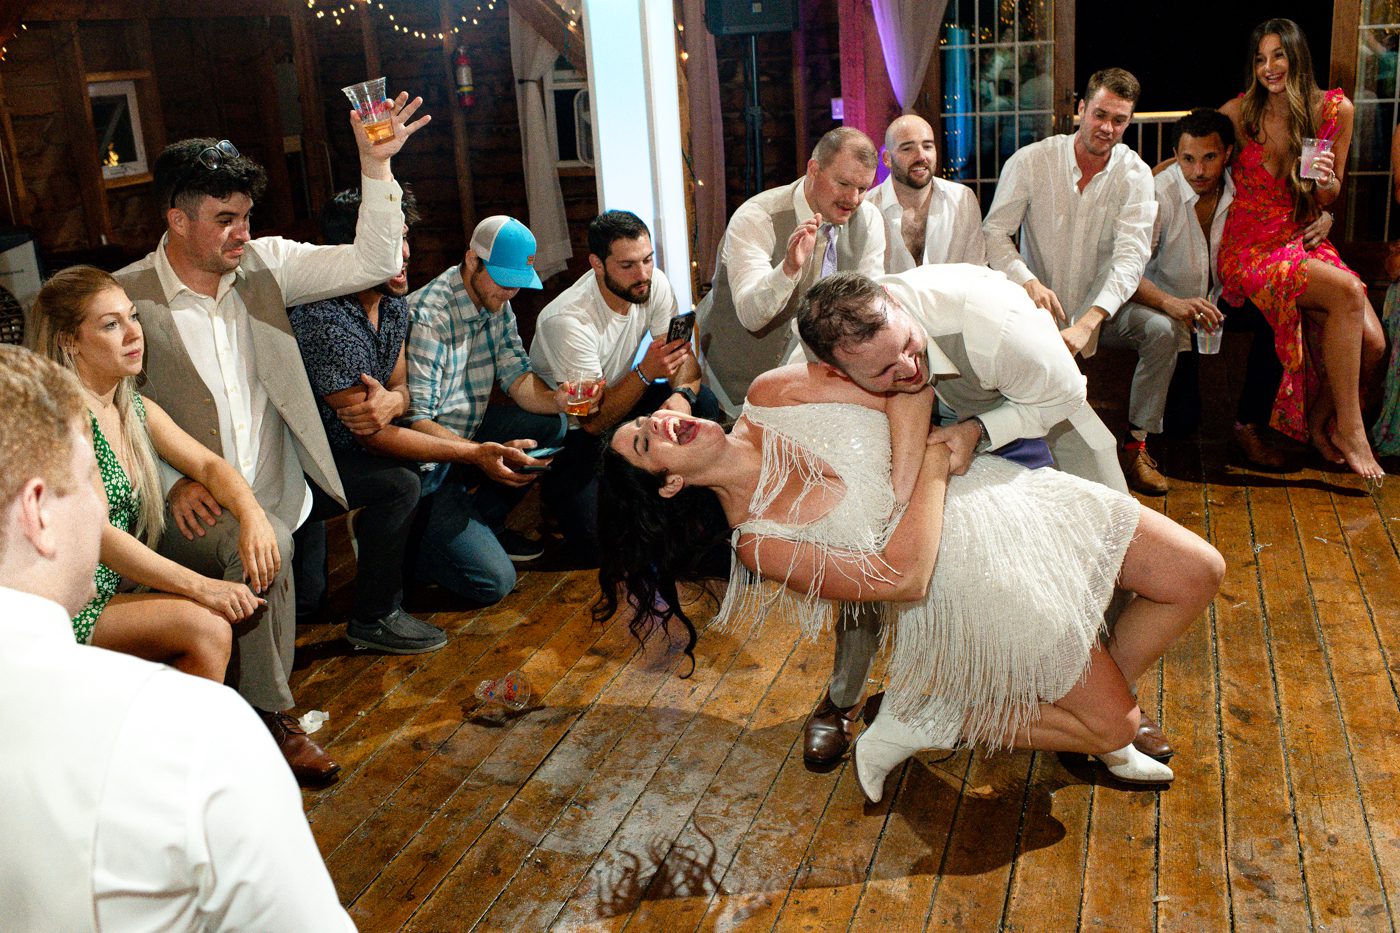 Groom-dips-bride-on-country-music-dancefloor